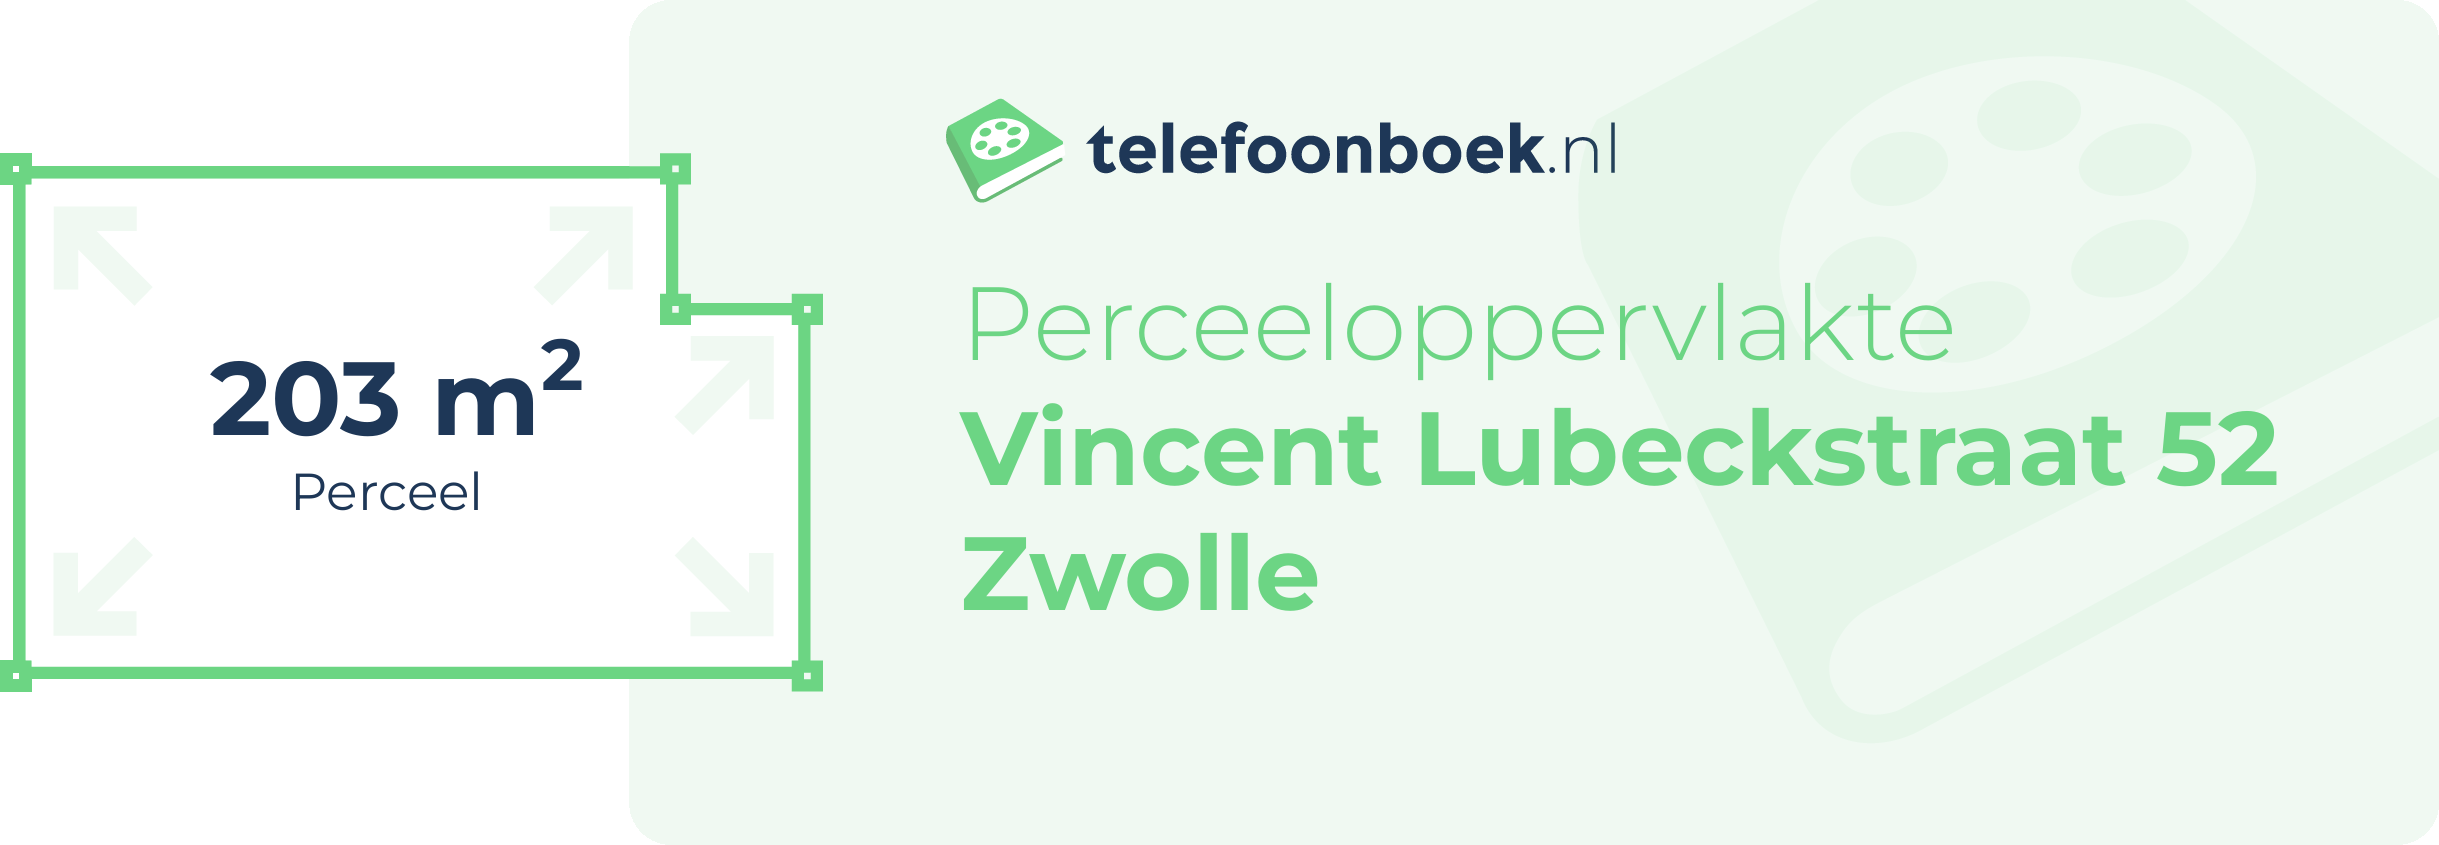 Perceeloppervlakte Vincent Lubeckstraat 52 Zwolle